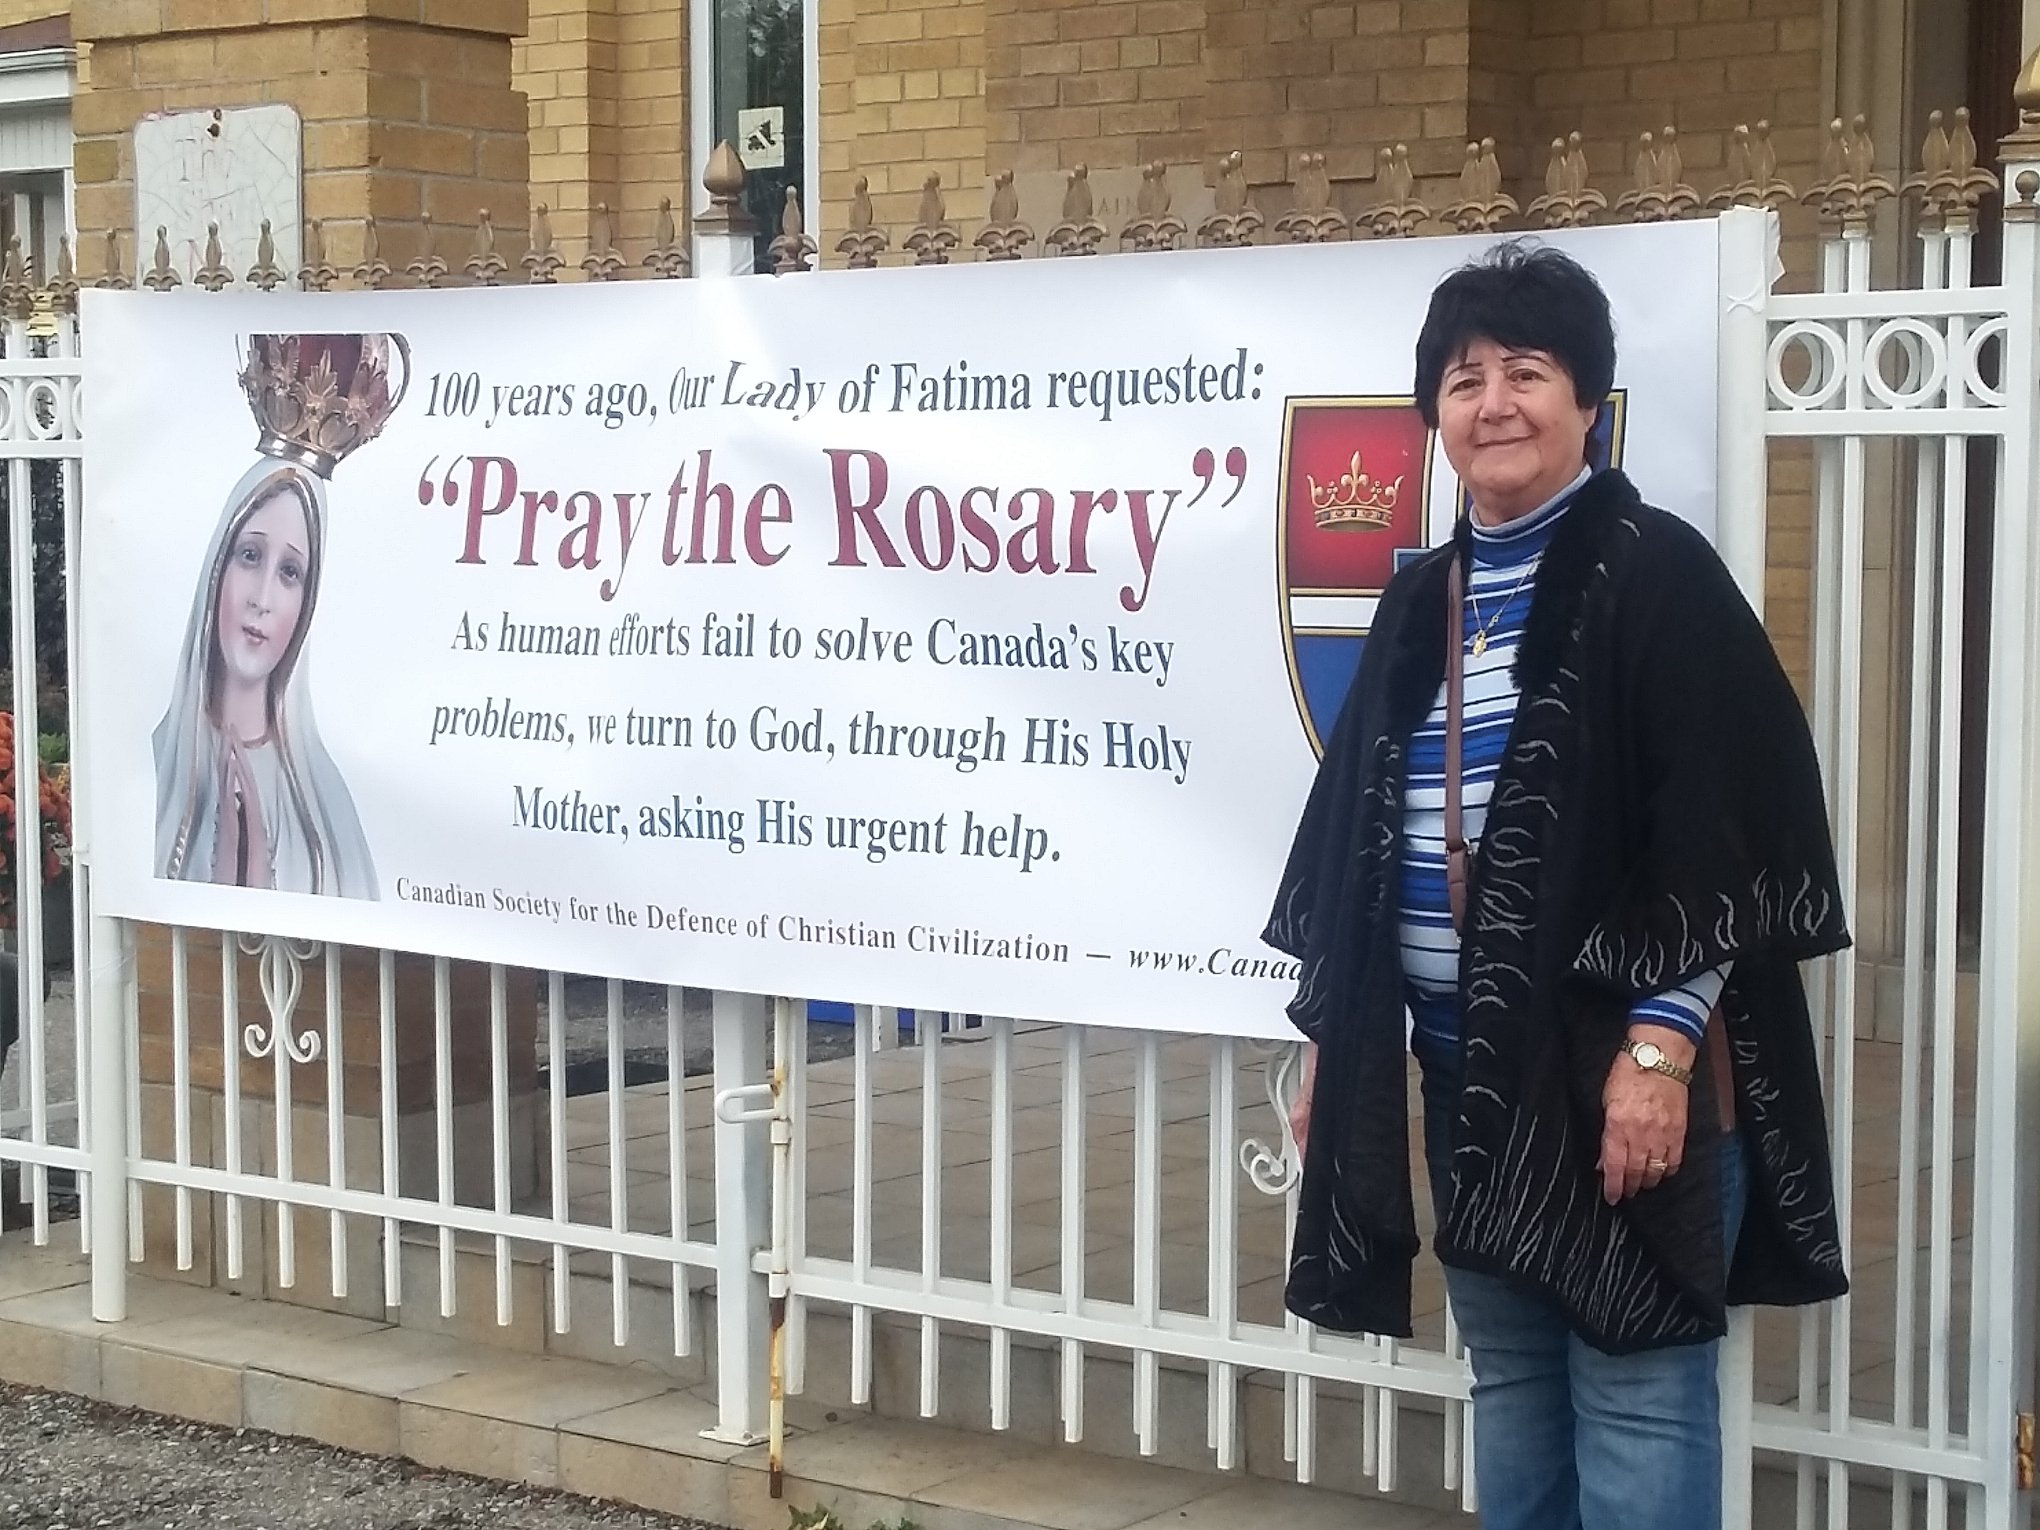 Helen beside the rosary rally banner